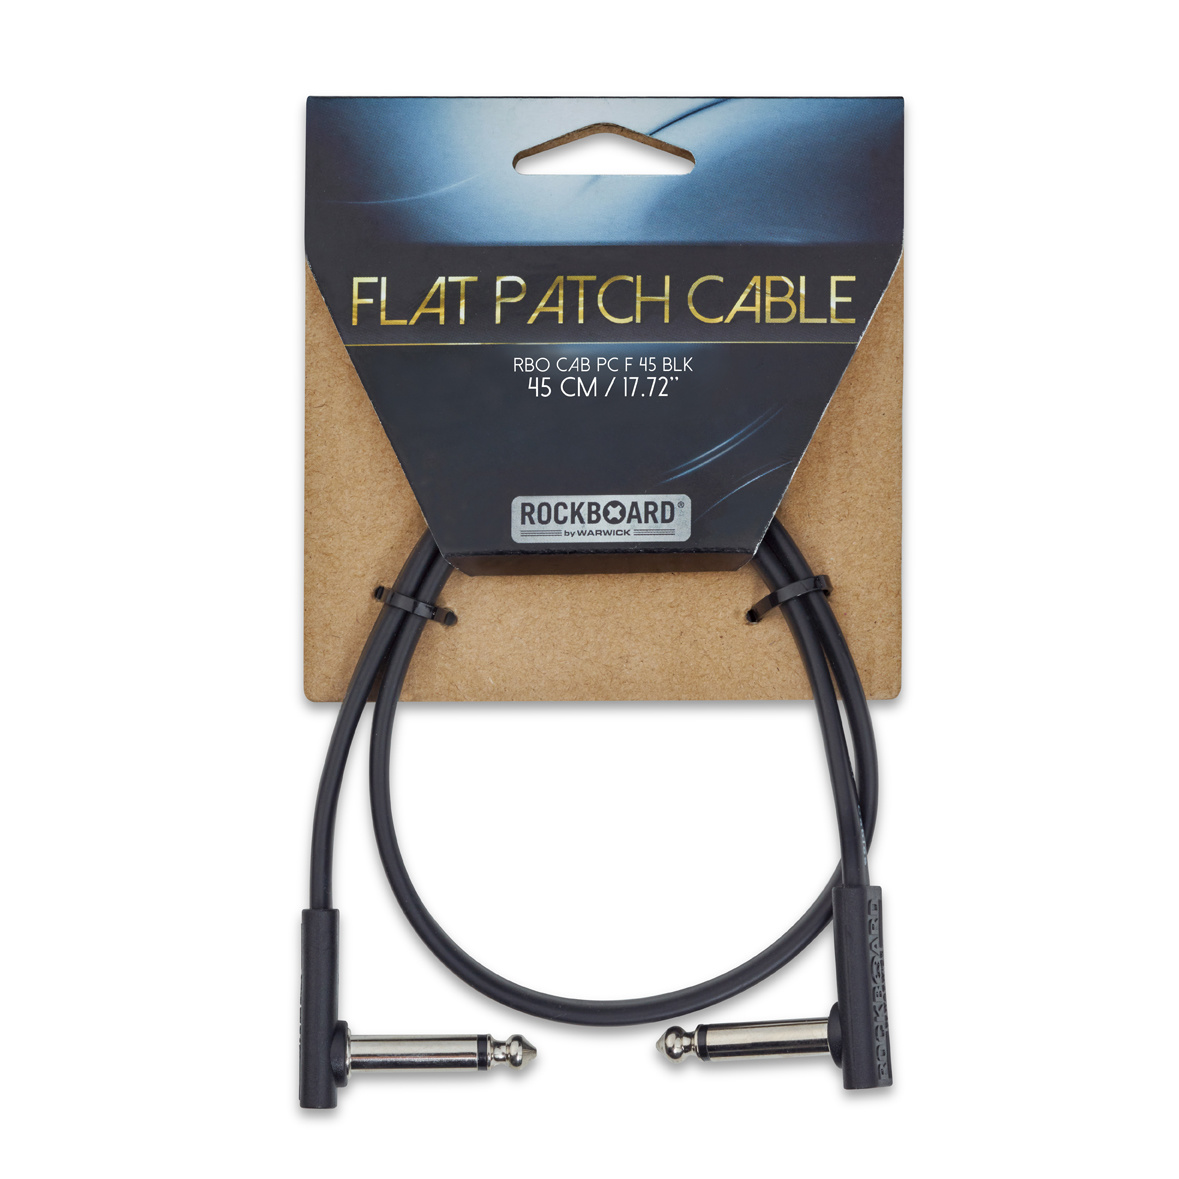 Rockboard Flat Patch Cable 45 cm / 17.72 in, Black